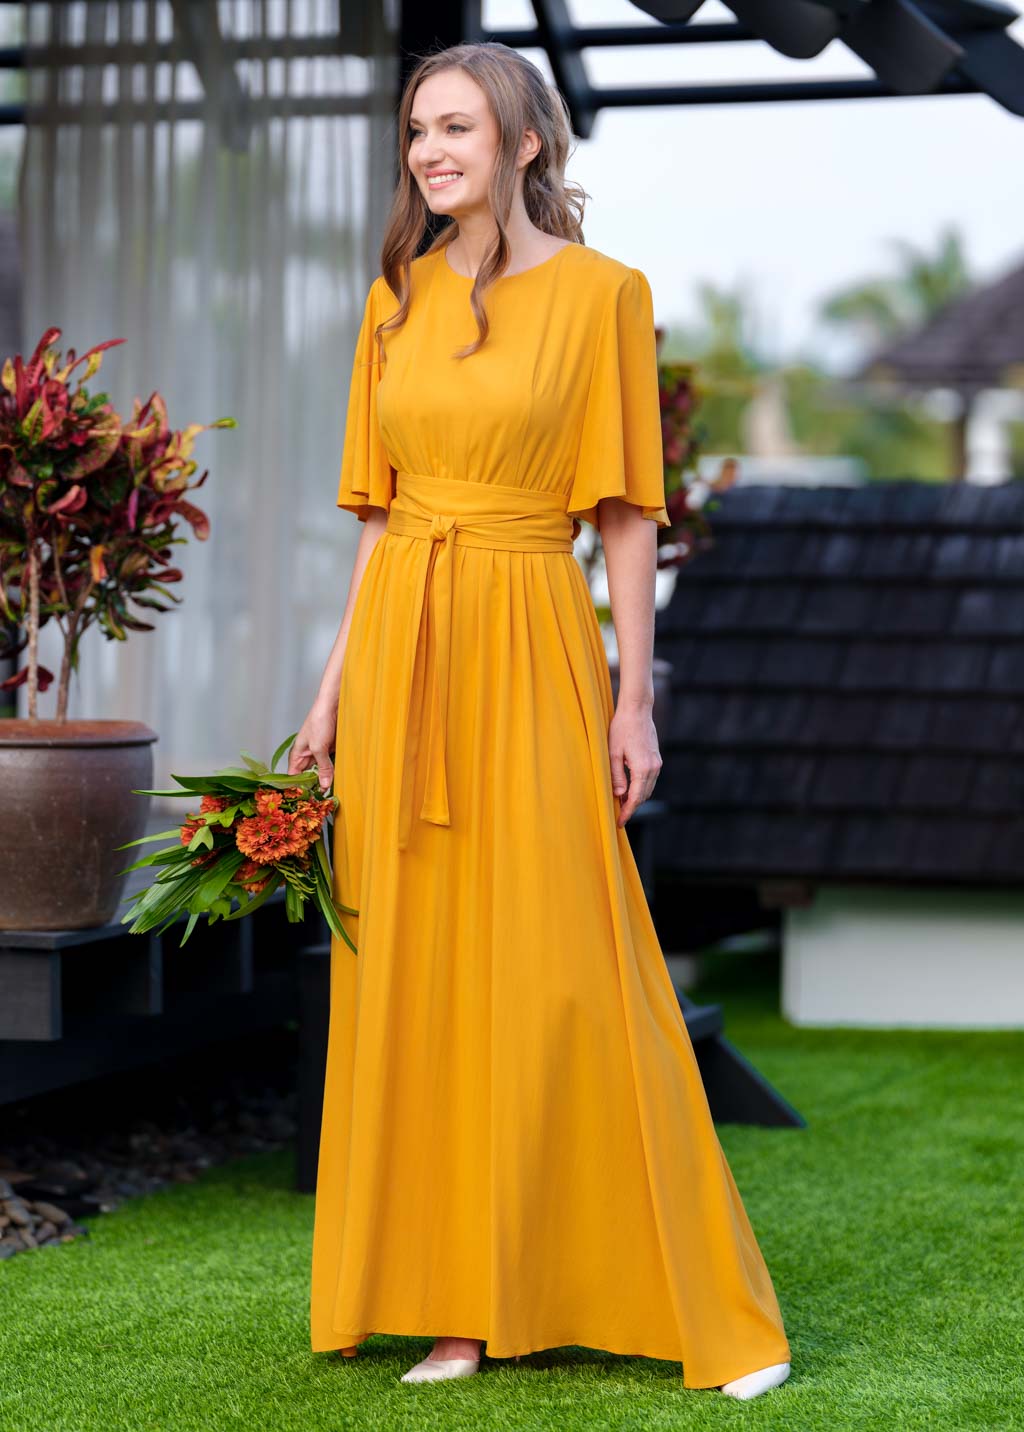 Honey yellow long dress with belt